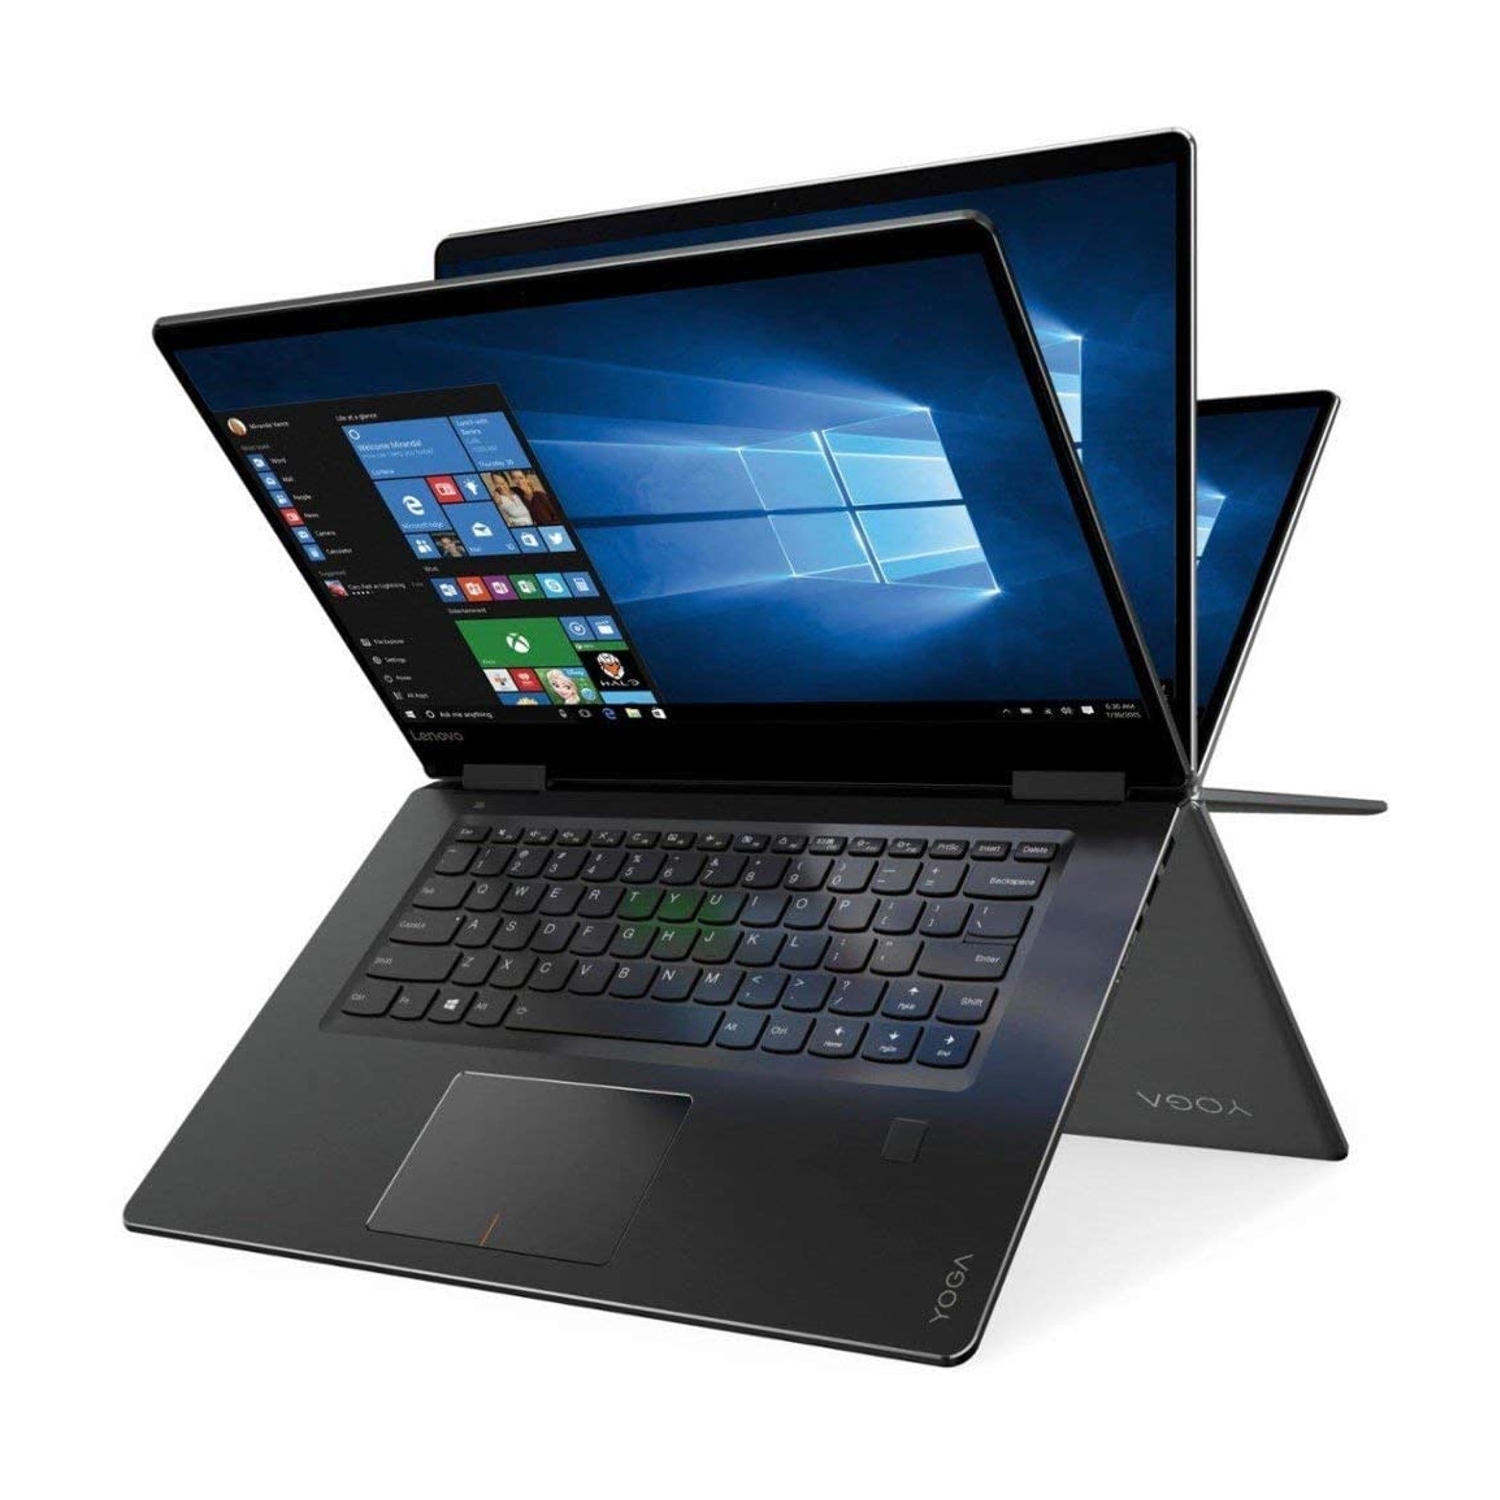 Lenovo Yoga 710-15IKB 15.6" 2-in-1 Touchscreen FHD 1080p Laptop, Core i5 7th Gen, 8Gb RAM, 256Gb SSD, Windows 10 (Refurbished Good)